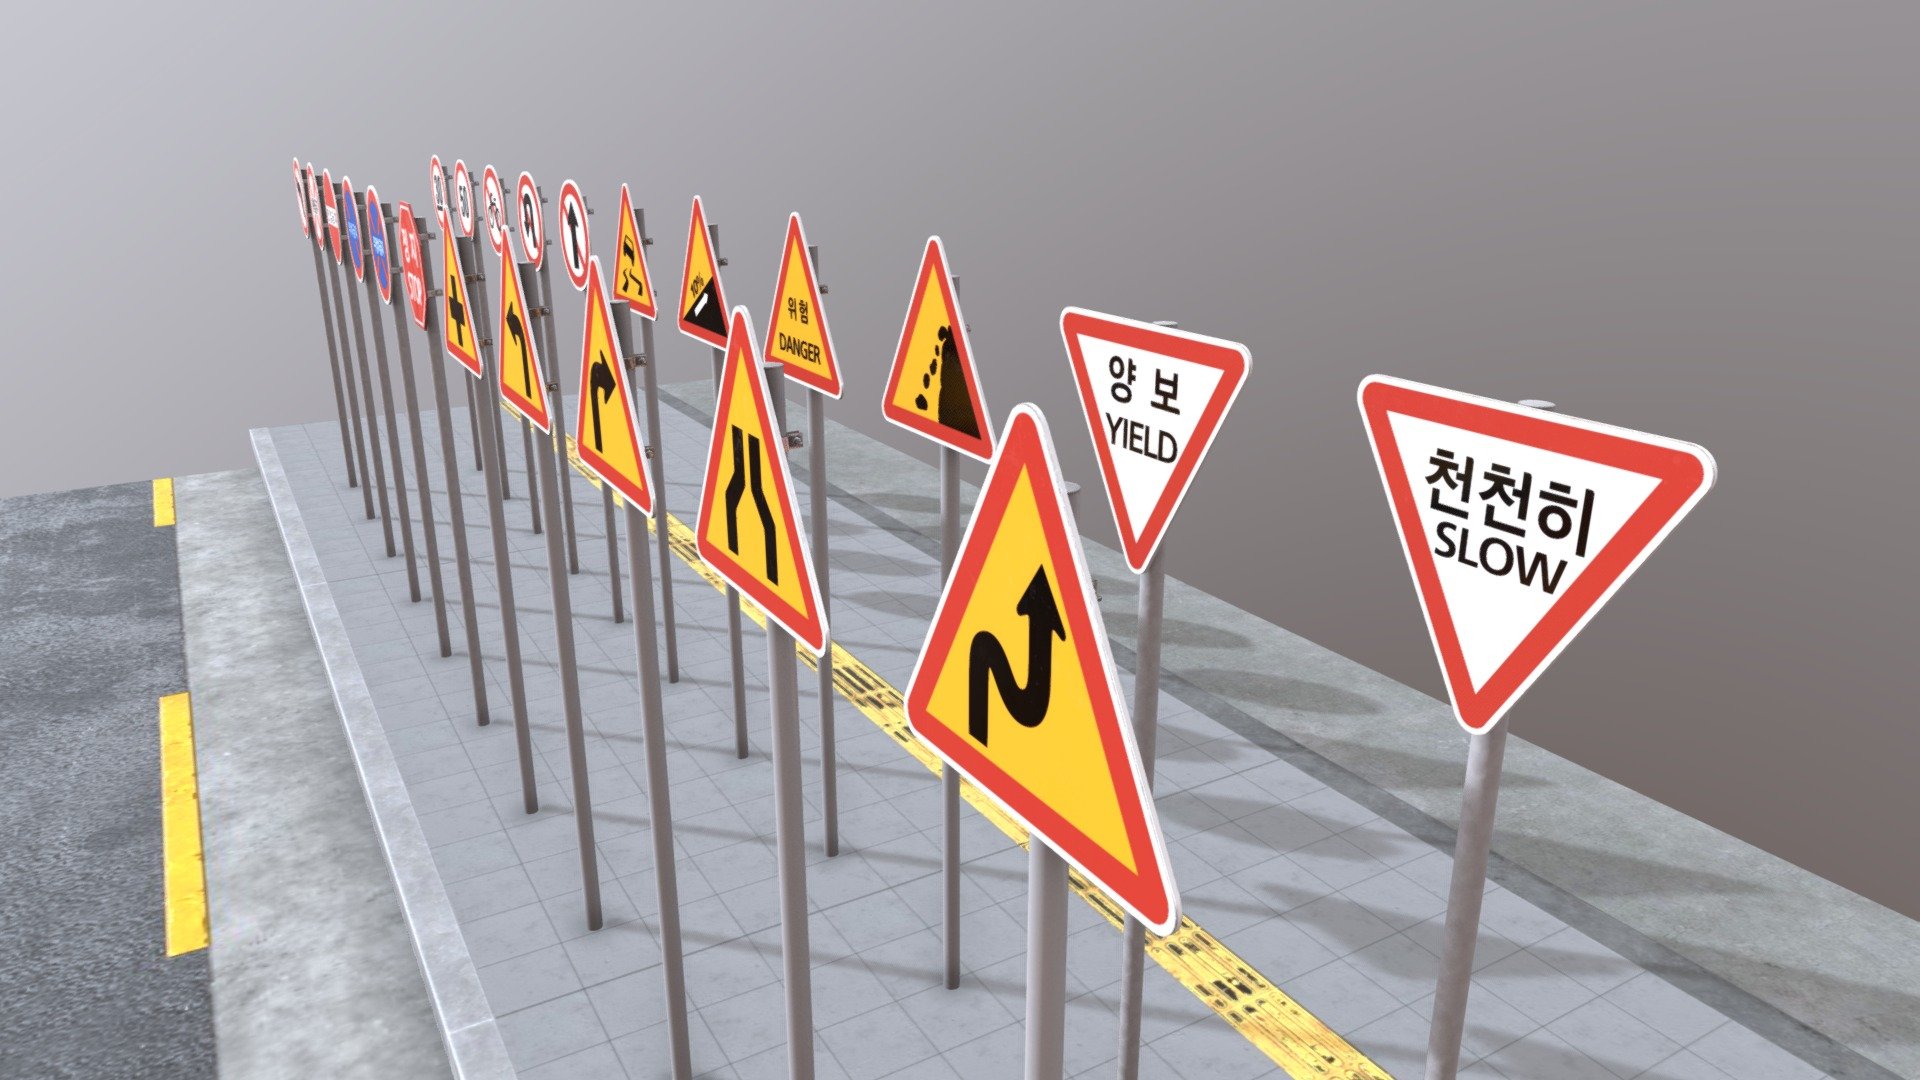 22 Korean traffic signs - Korean traffic signs(South Korea) - Buy Royalty Free 3D model by clon6767 3d model